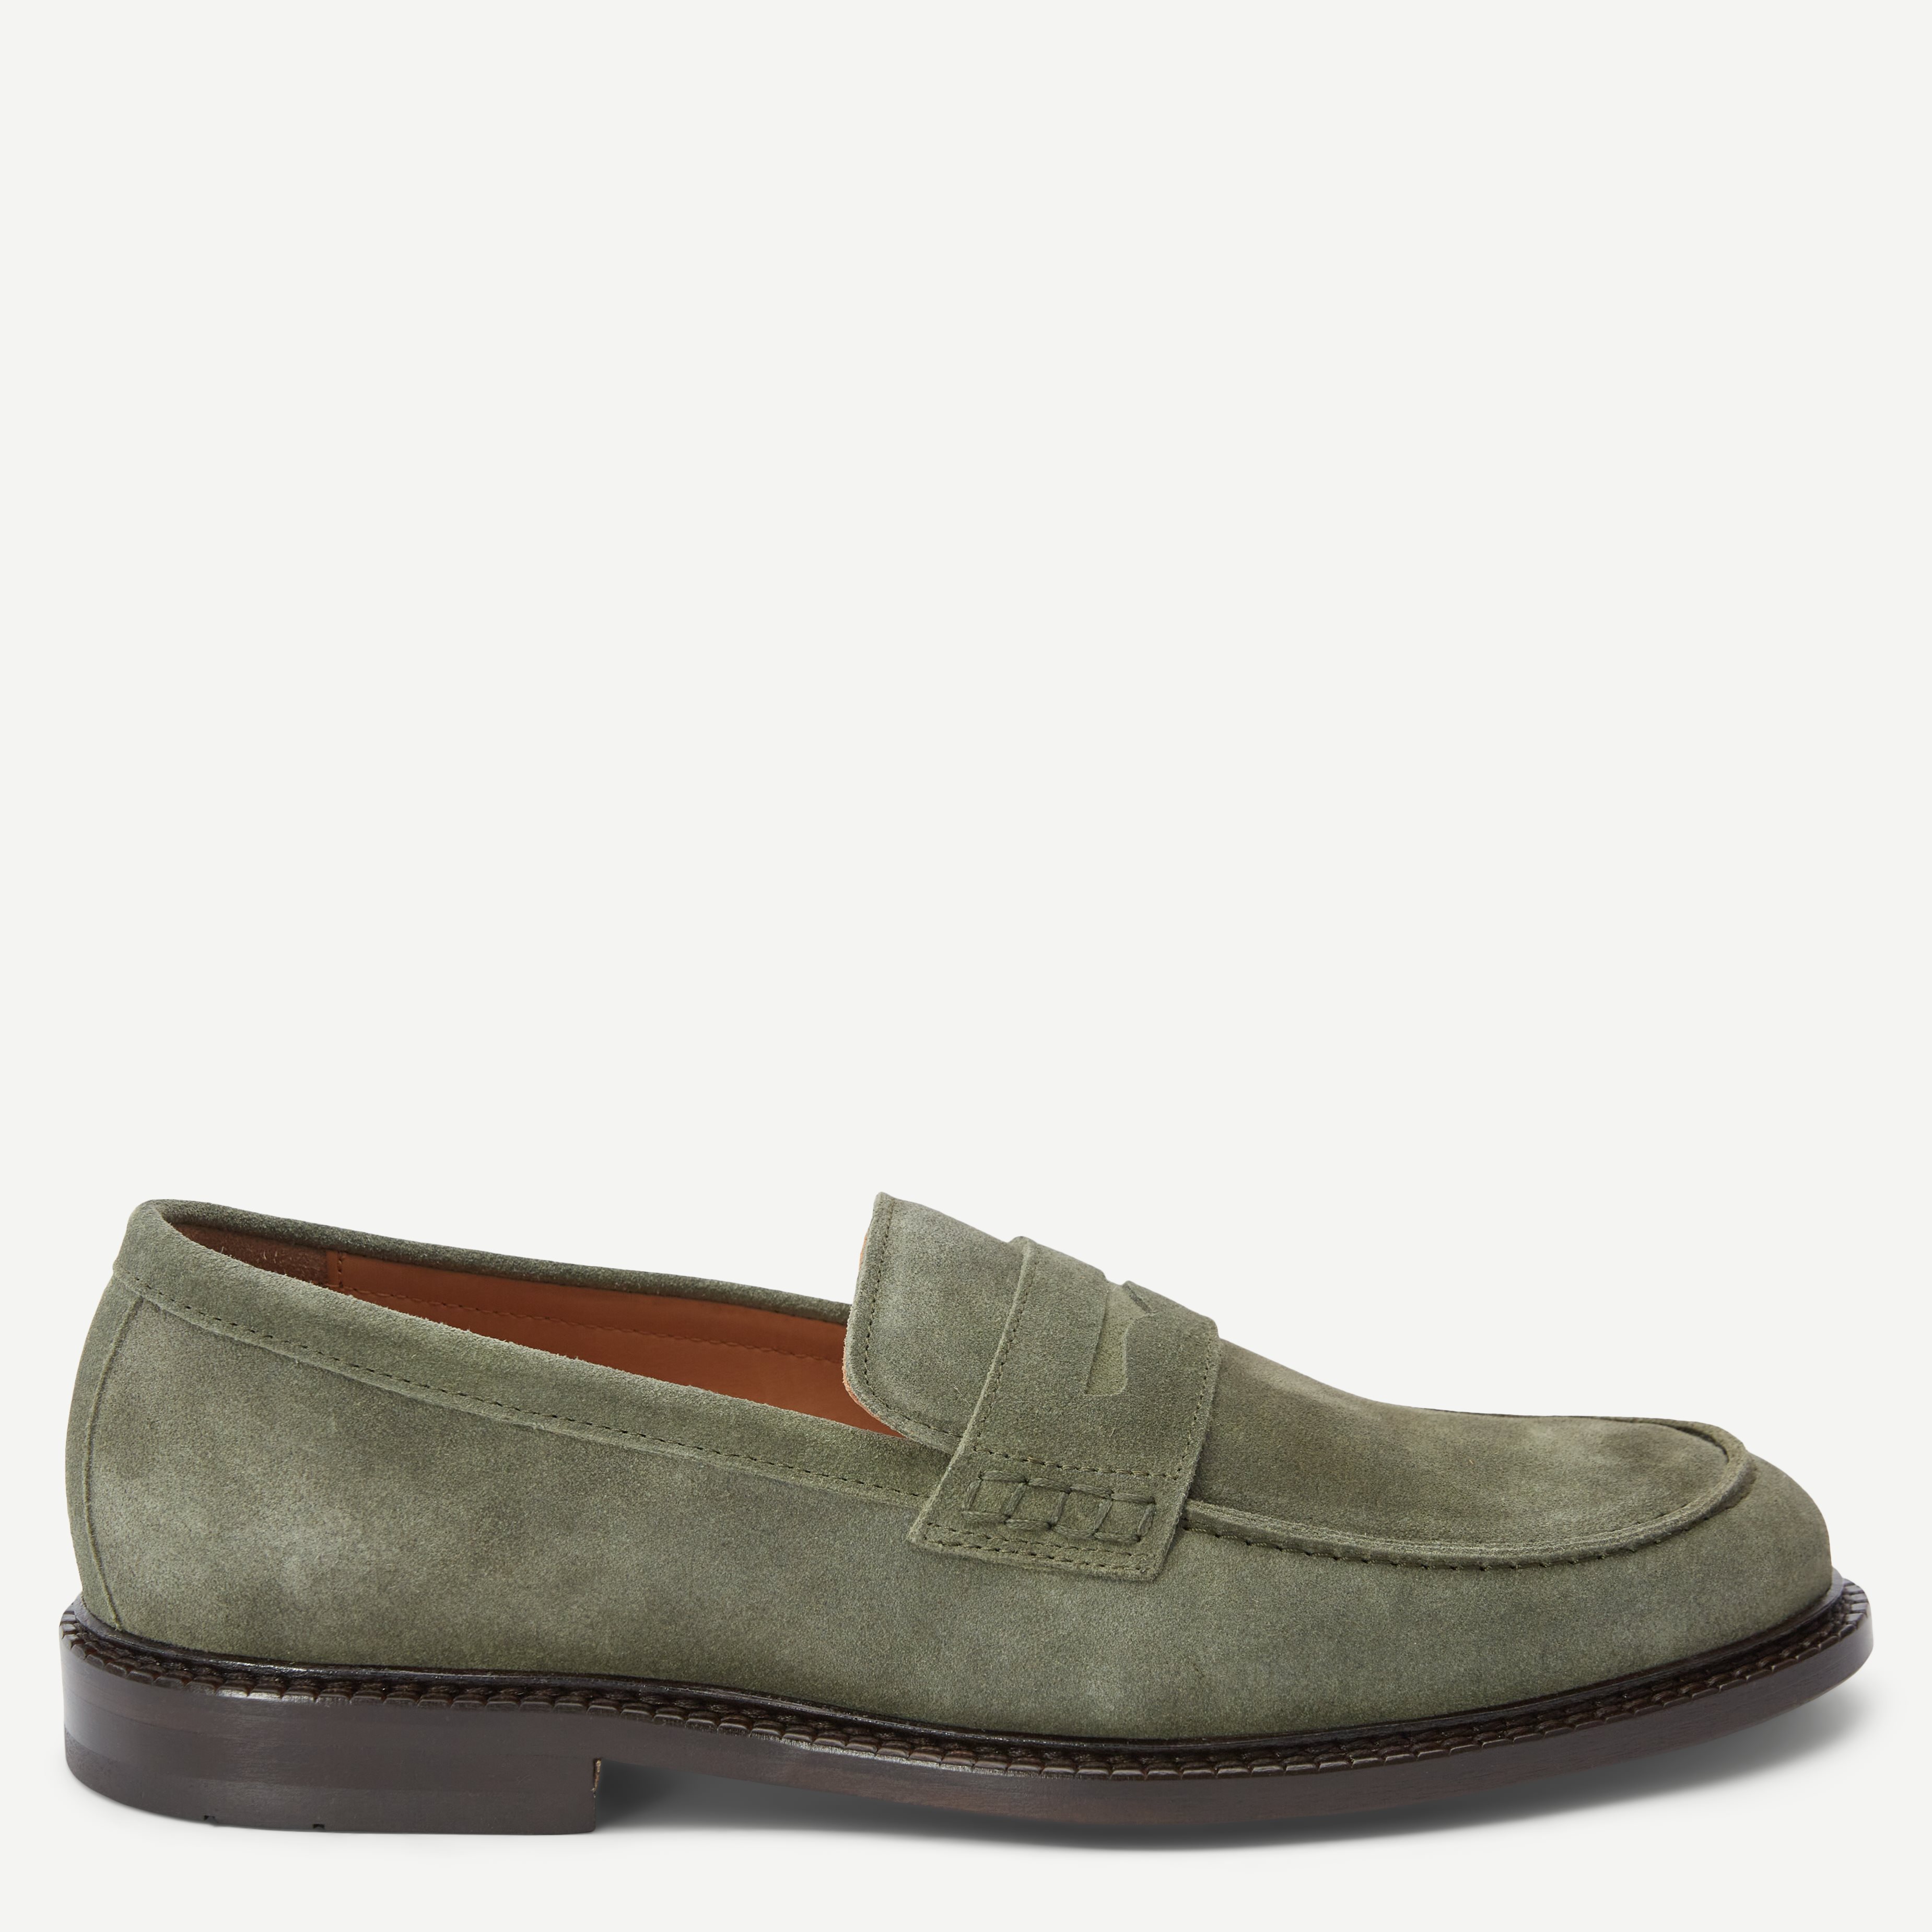 Ahler Shoes 30859 SUEDE LOAFER Green